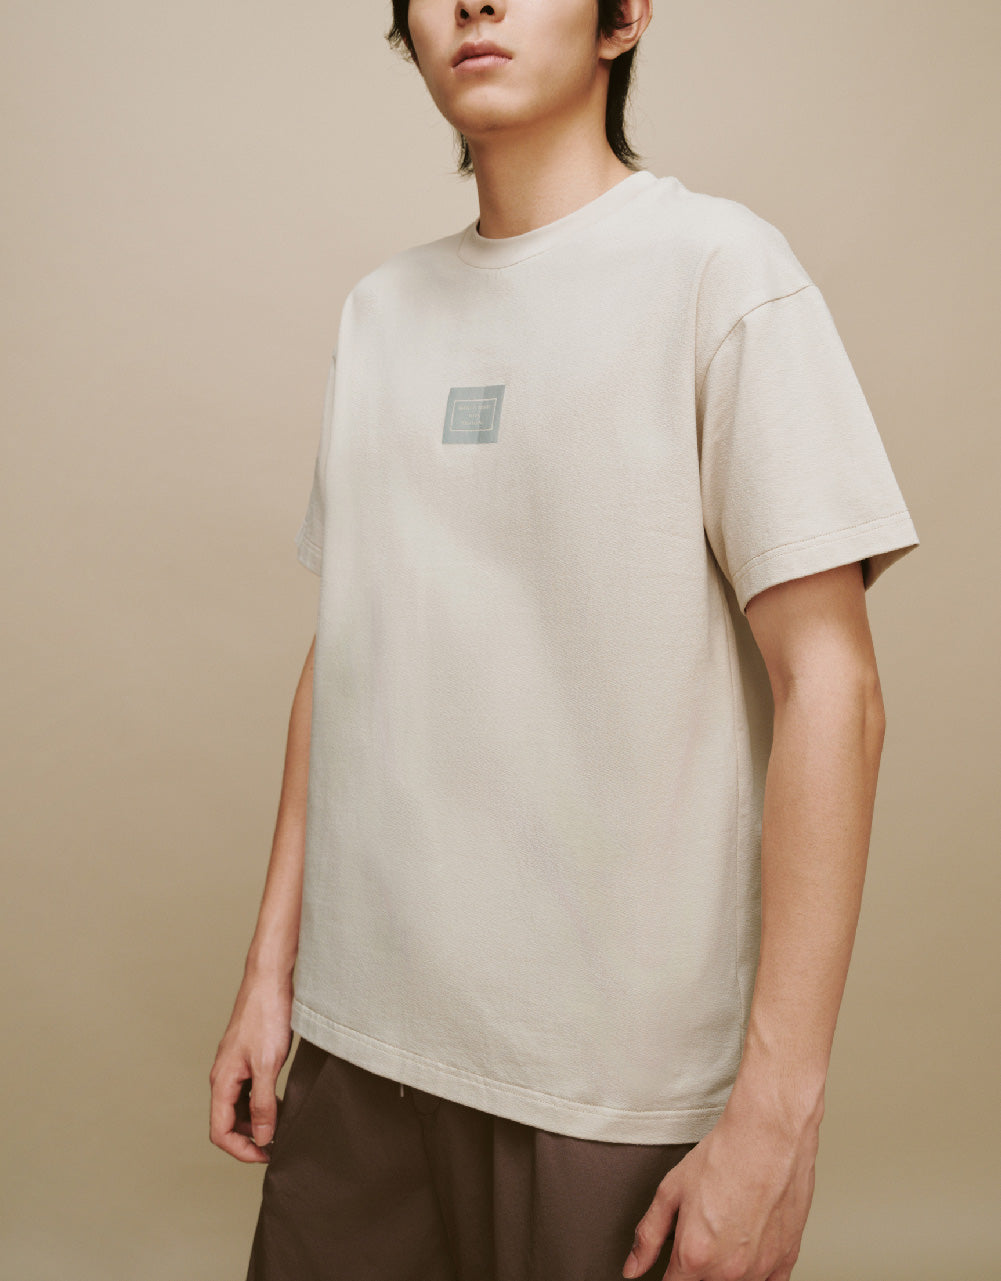 Icon Printed Crew Neck T-Shirt